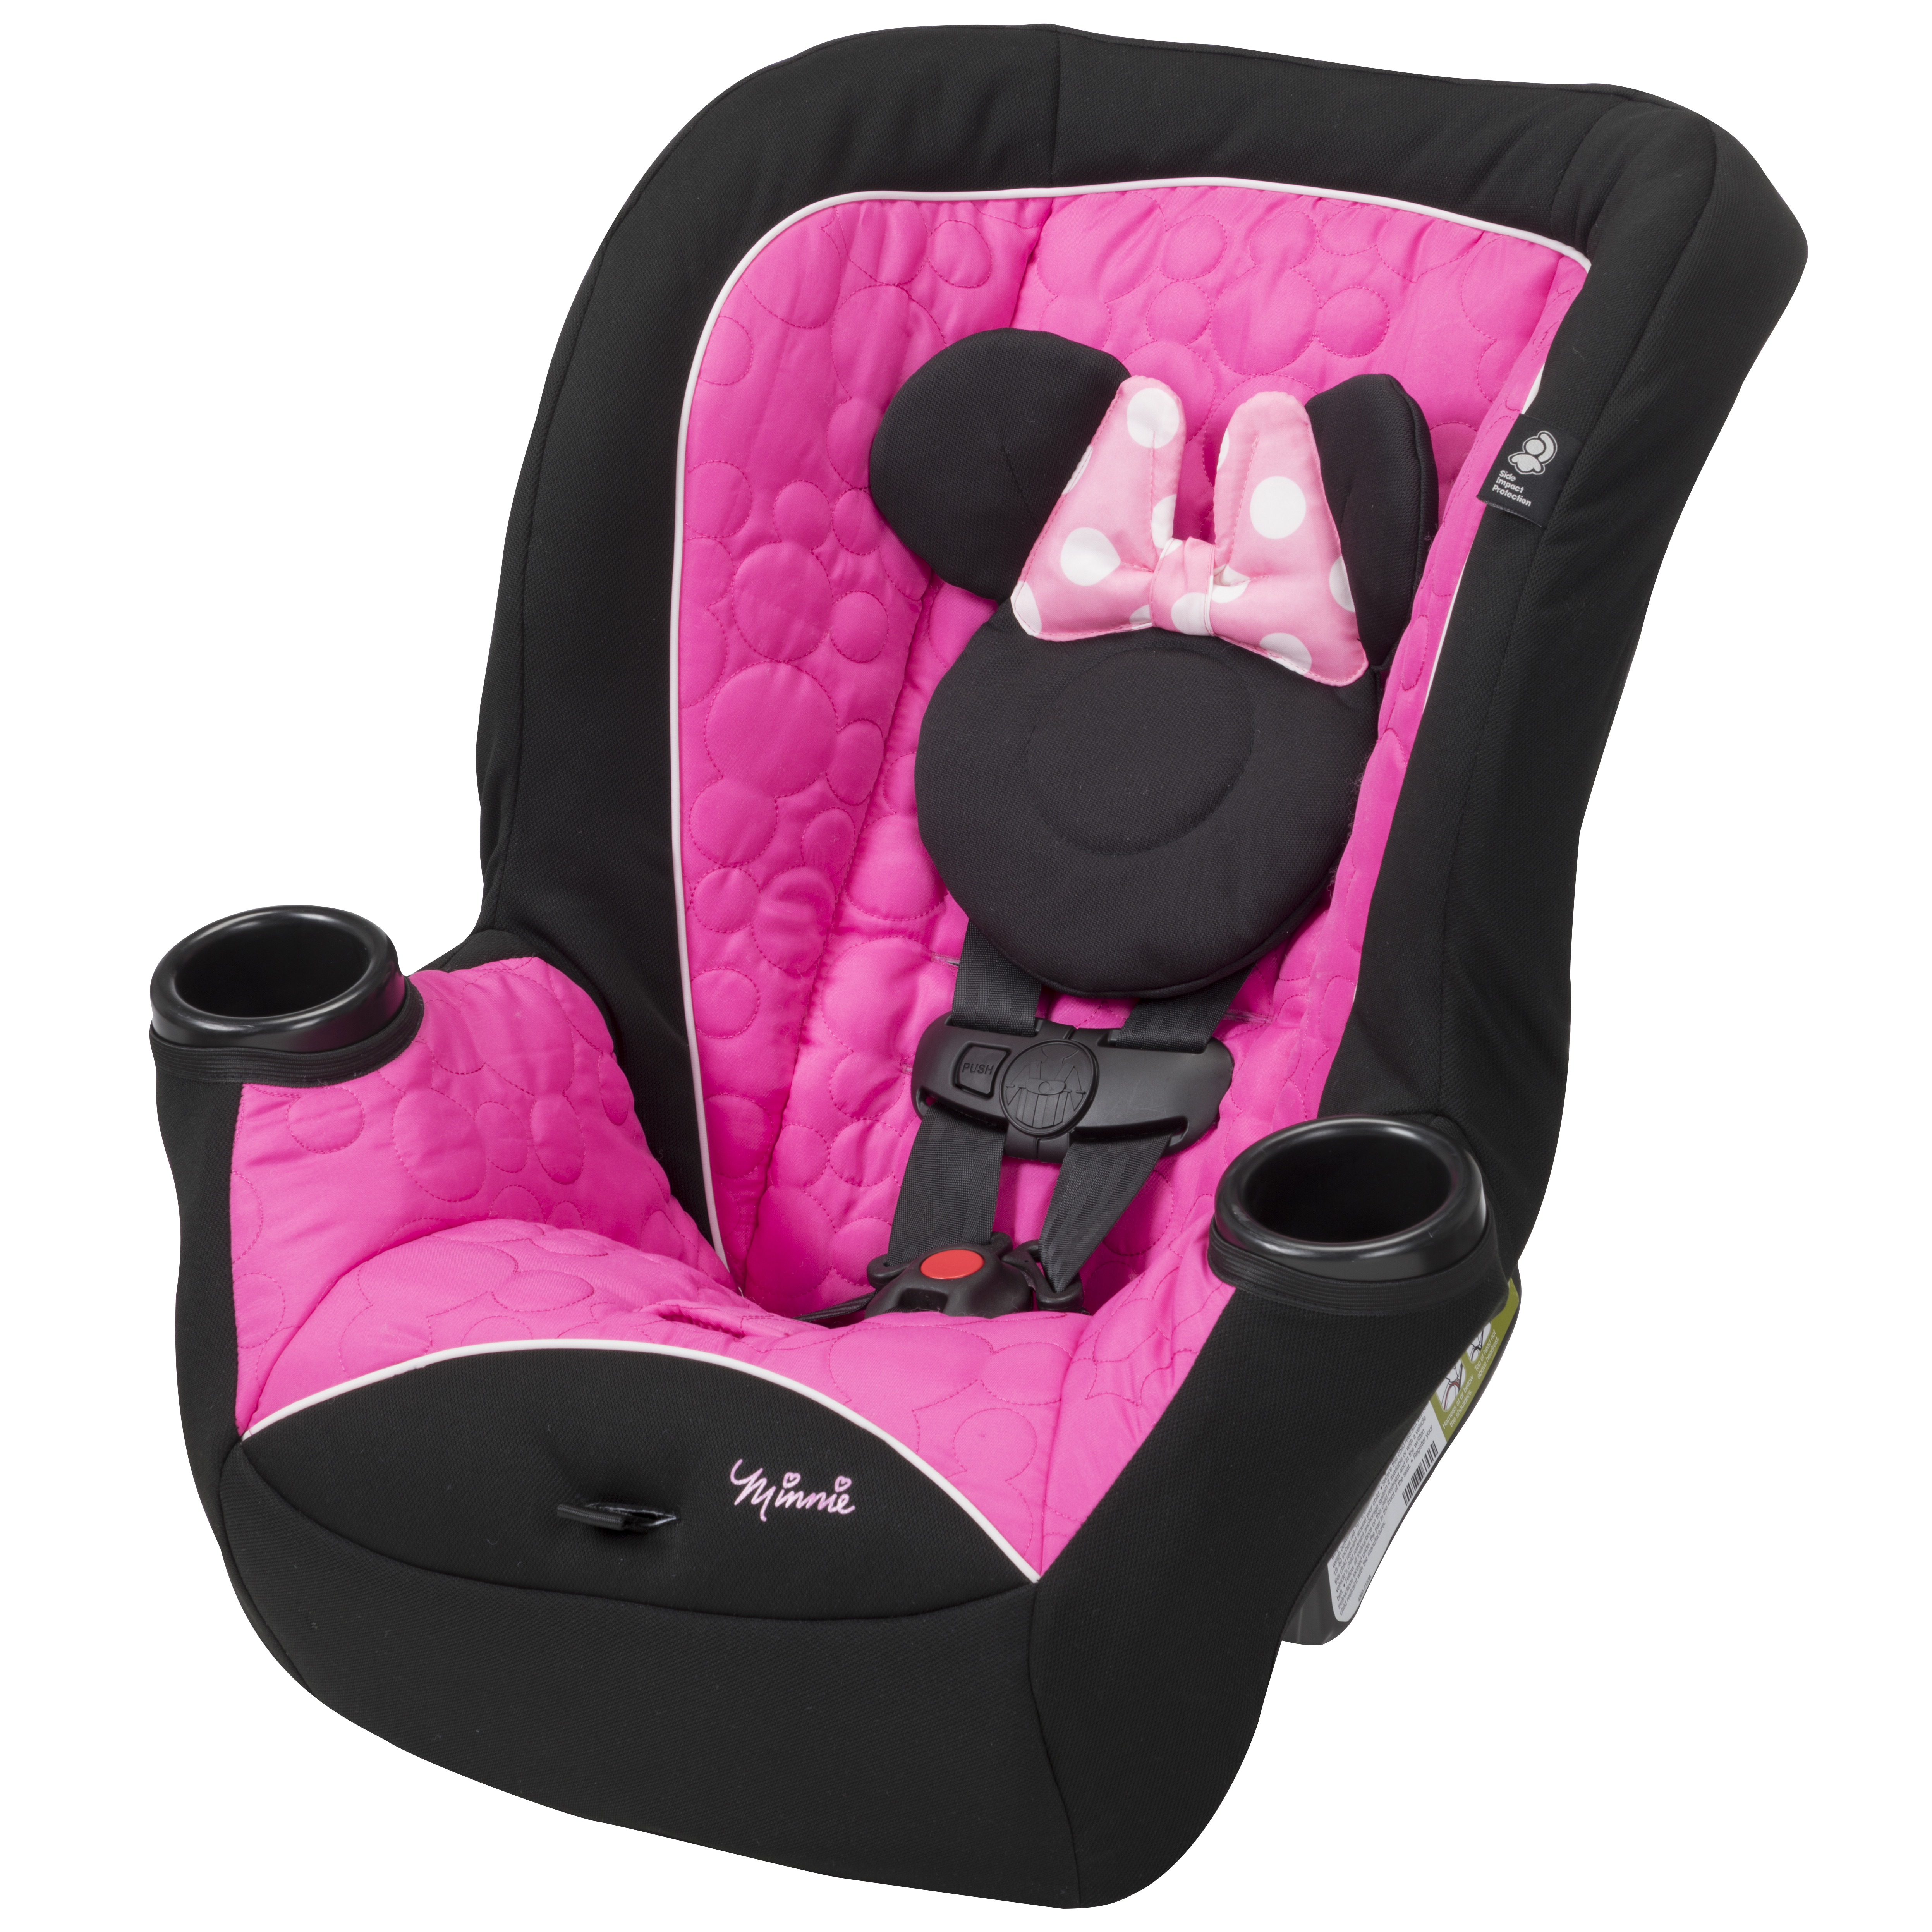 baby car seats kmart